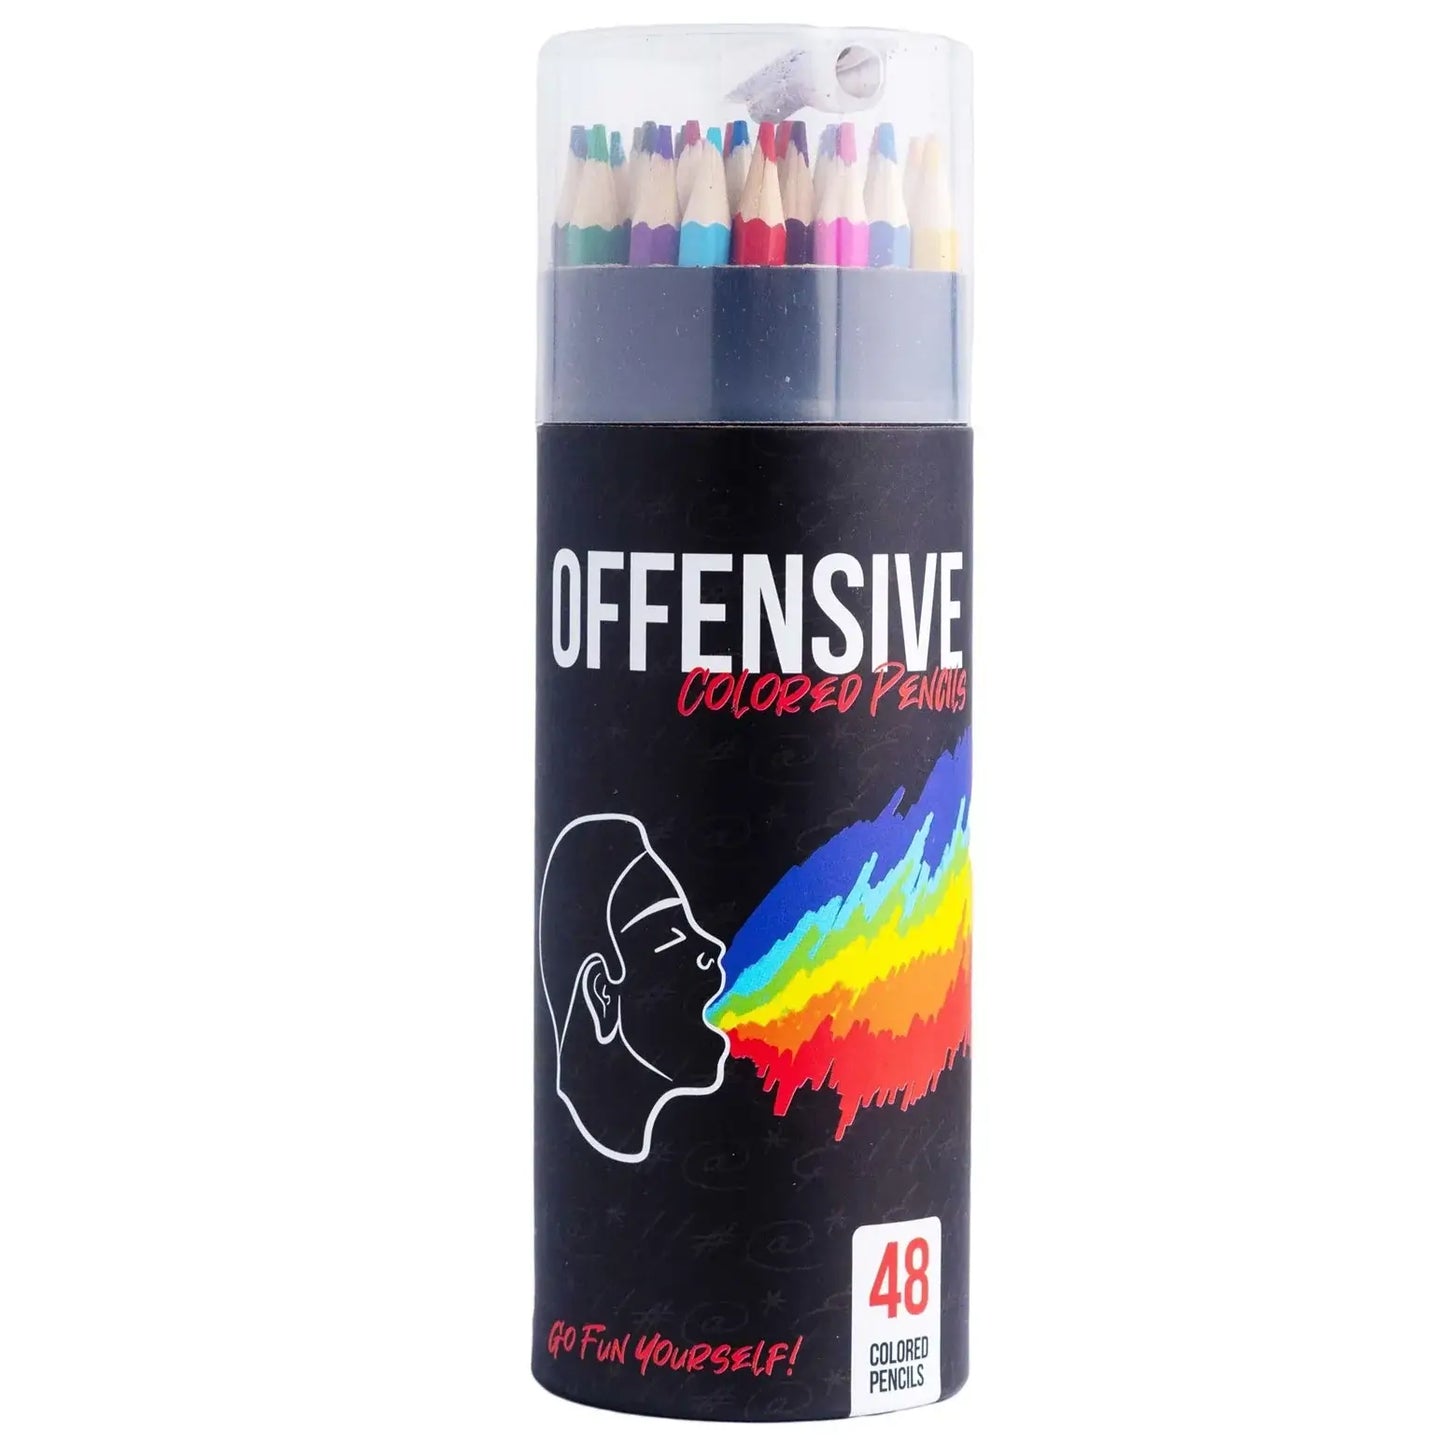 Pen15 - Offensive Colored Pencils